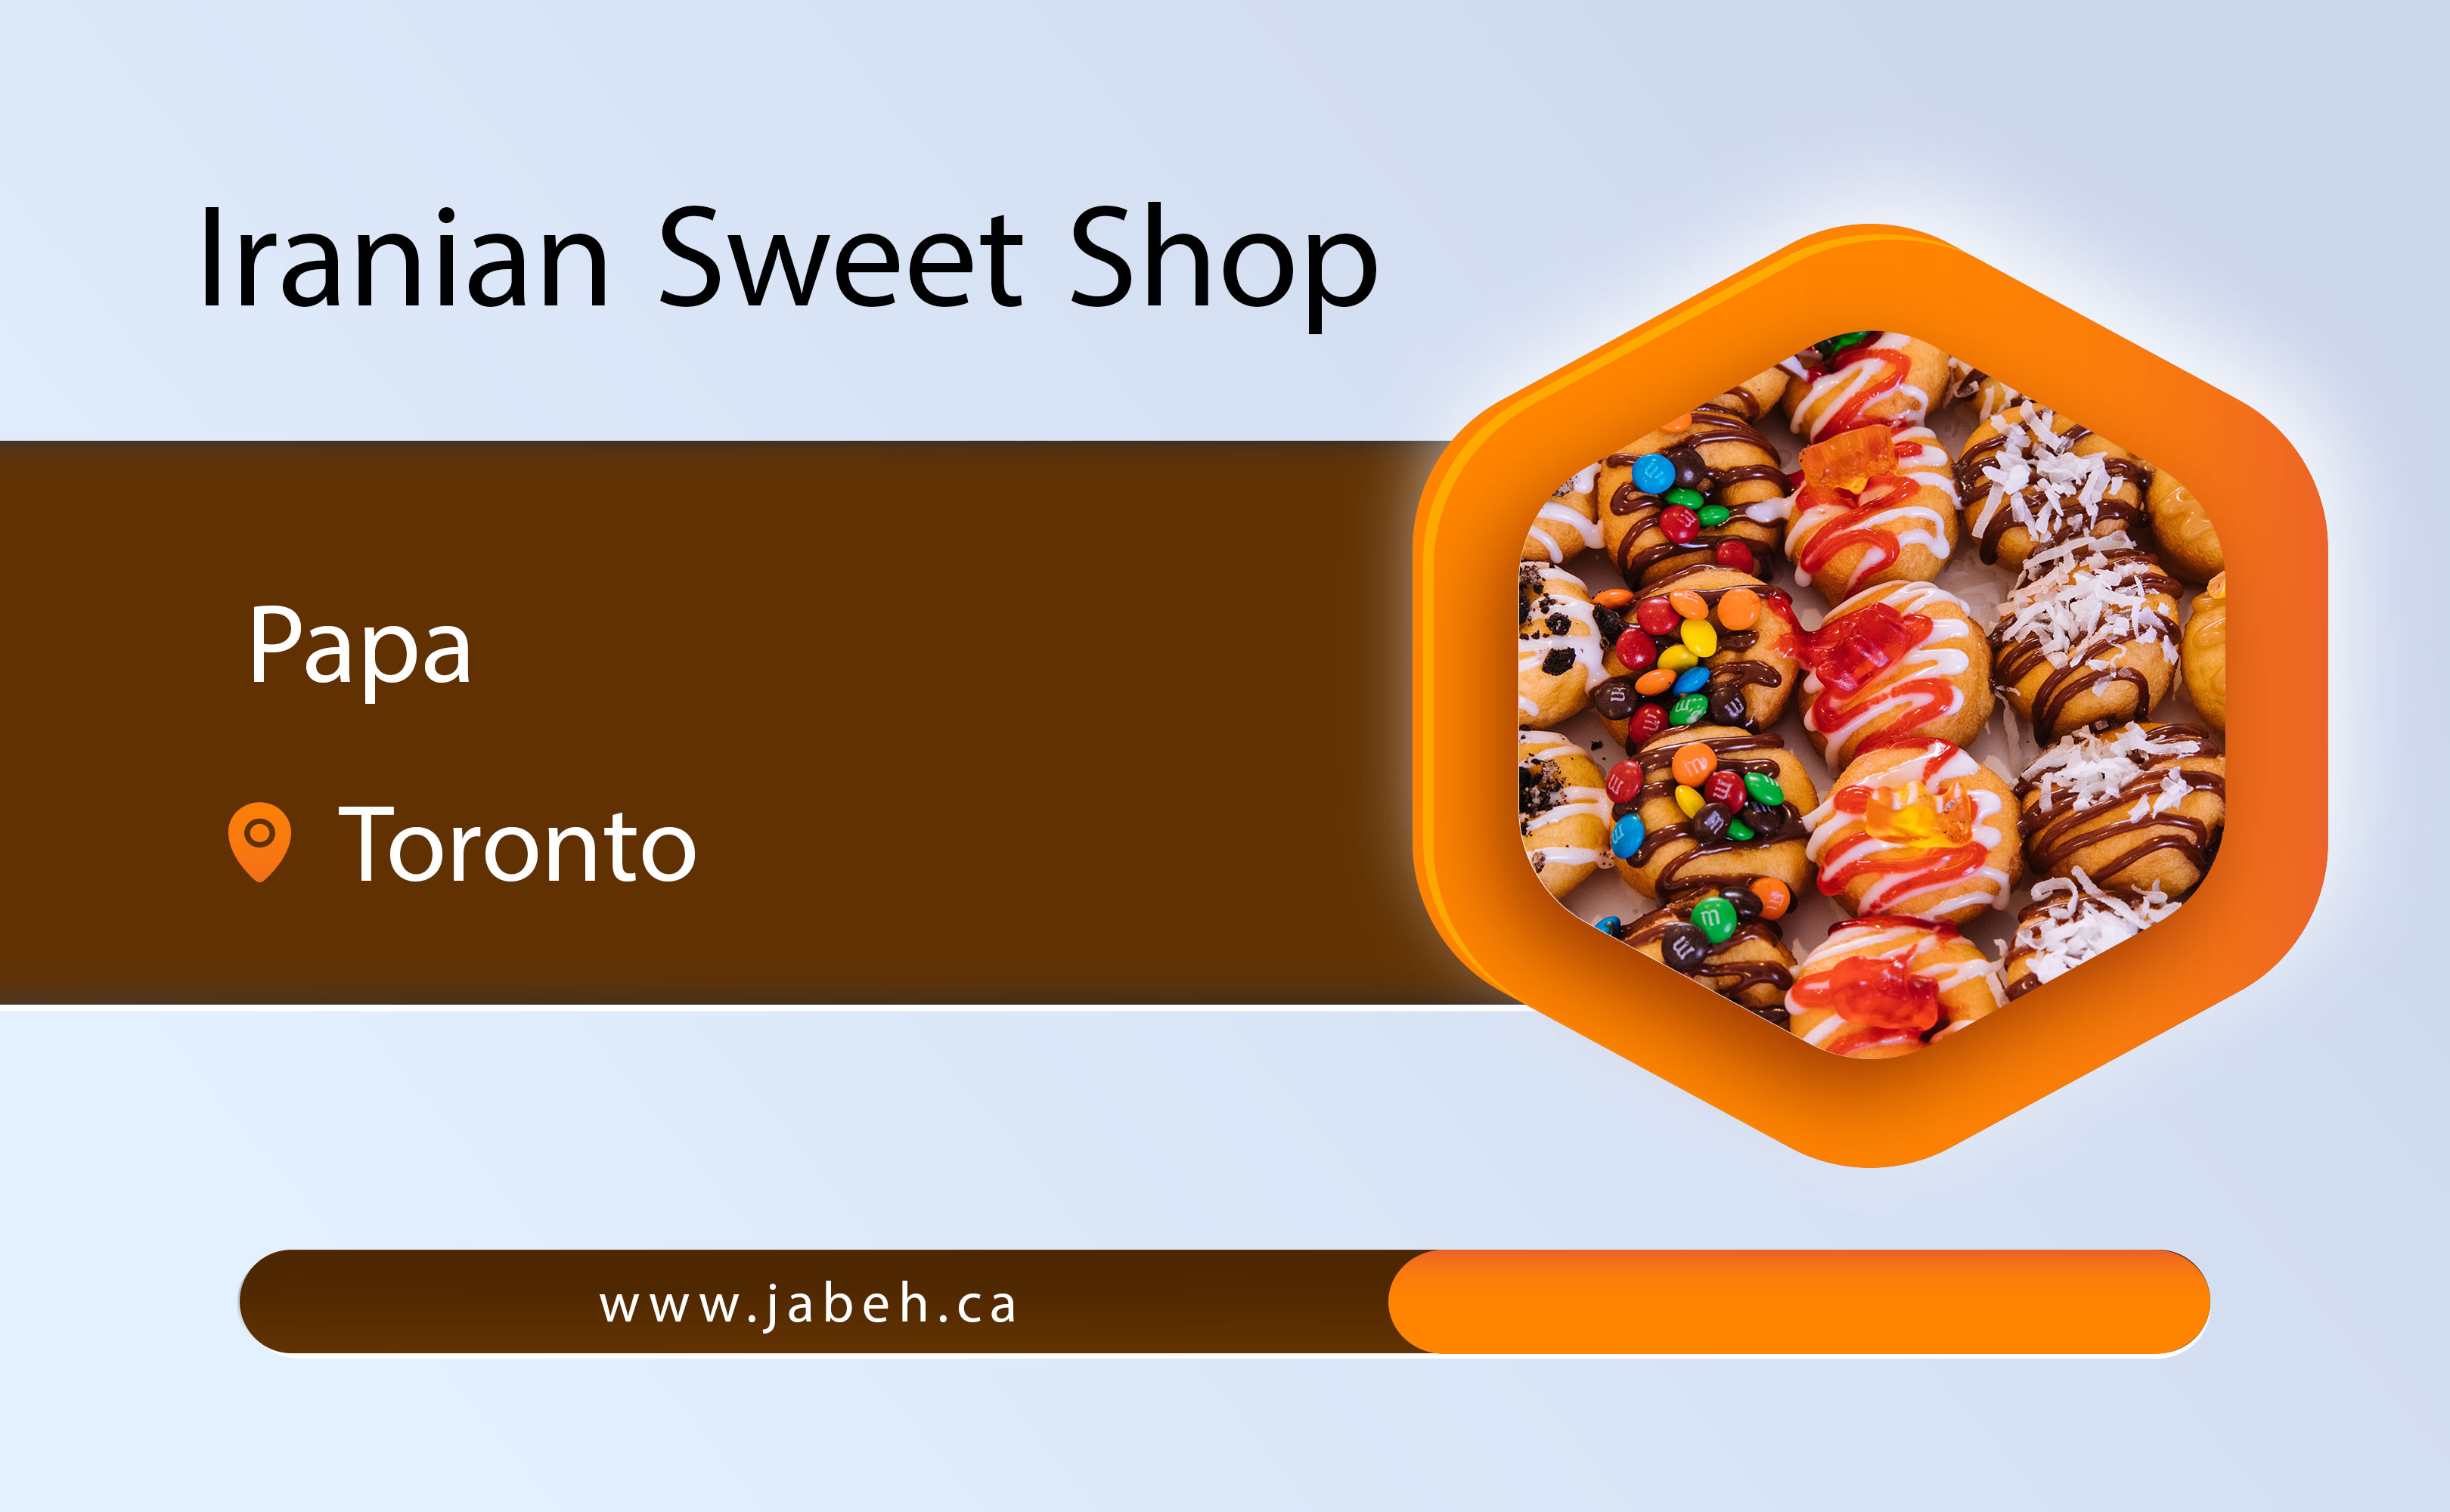 Papa's Iranian sweet shop in Toronto